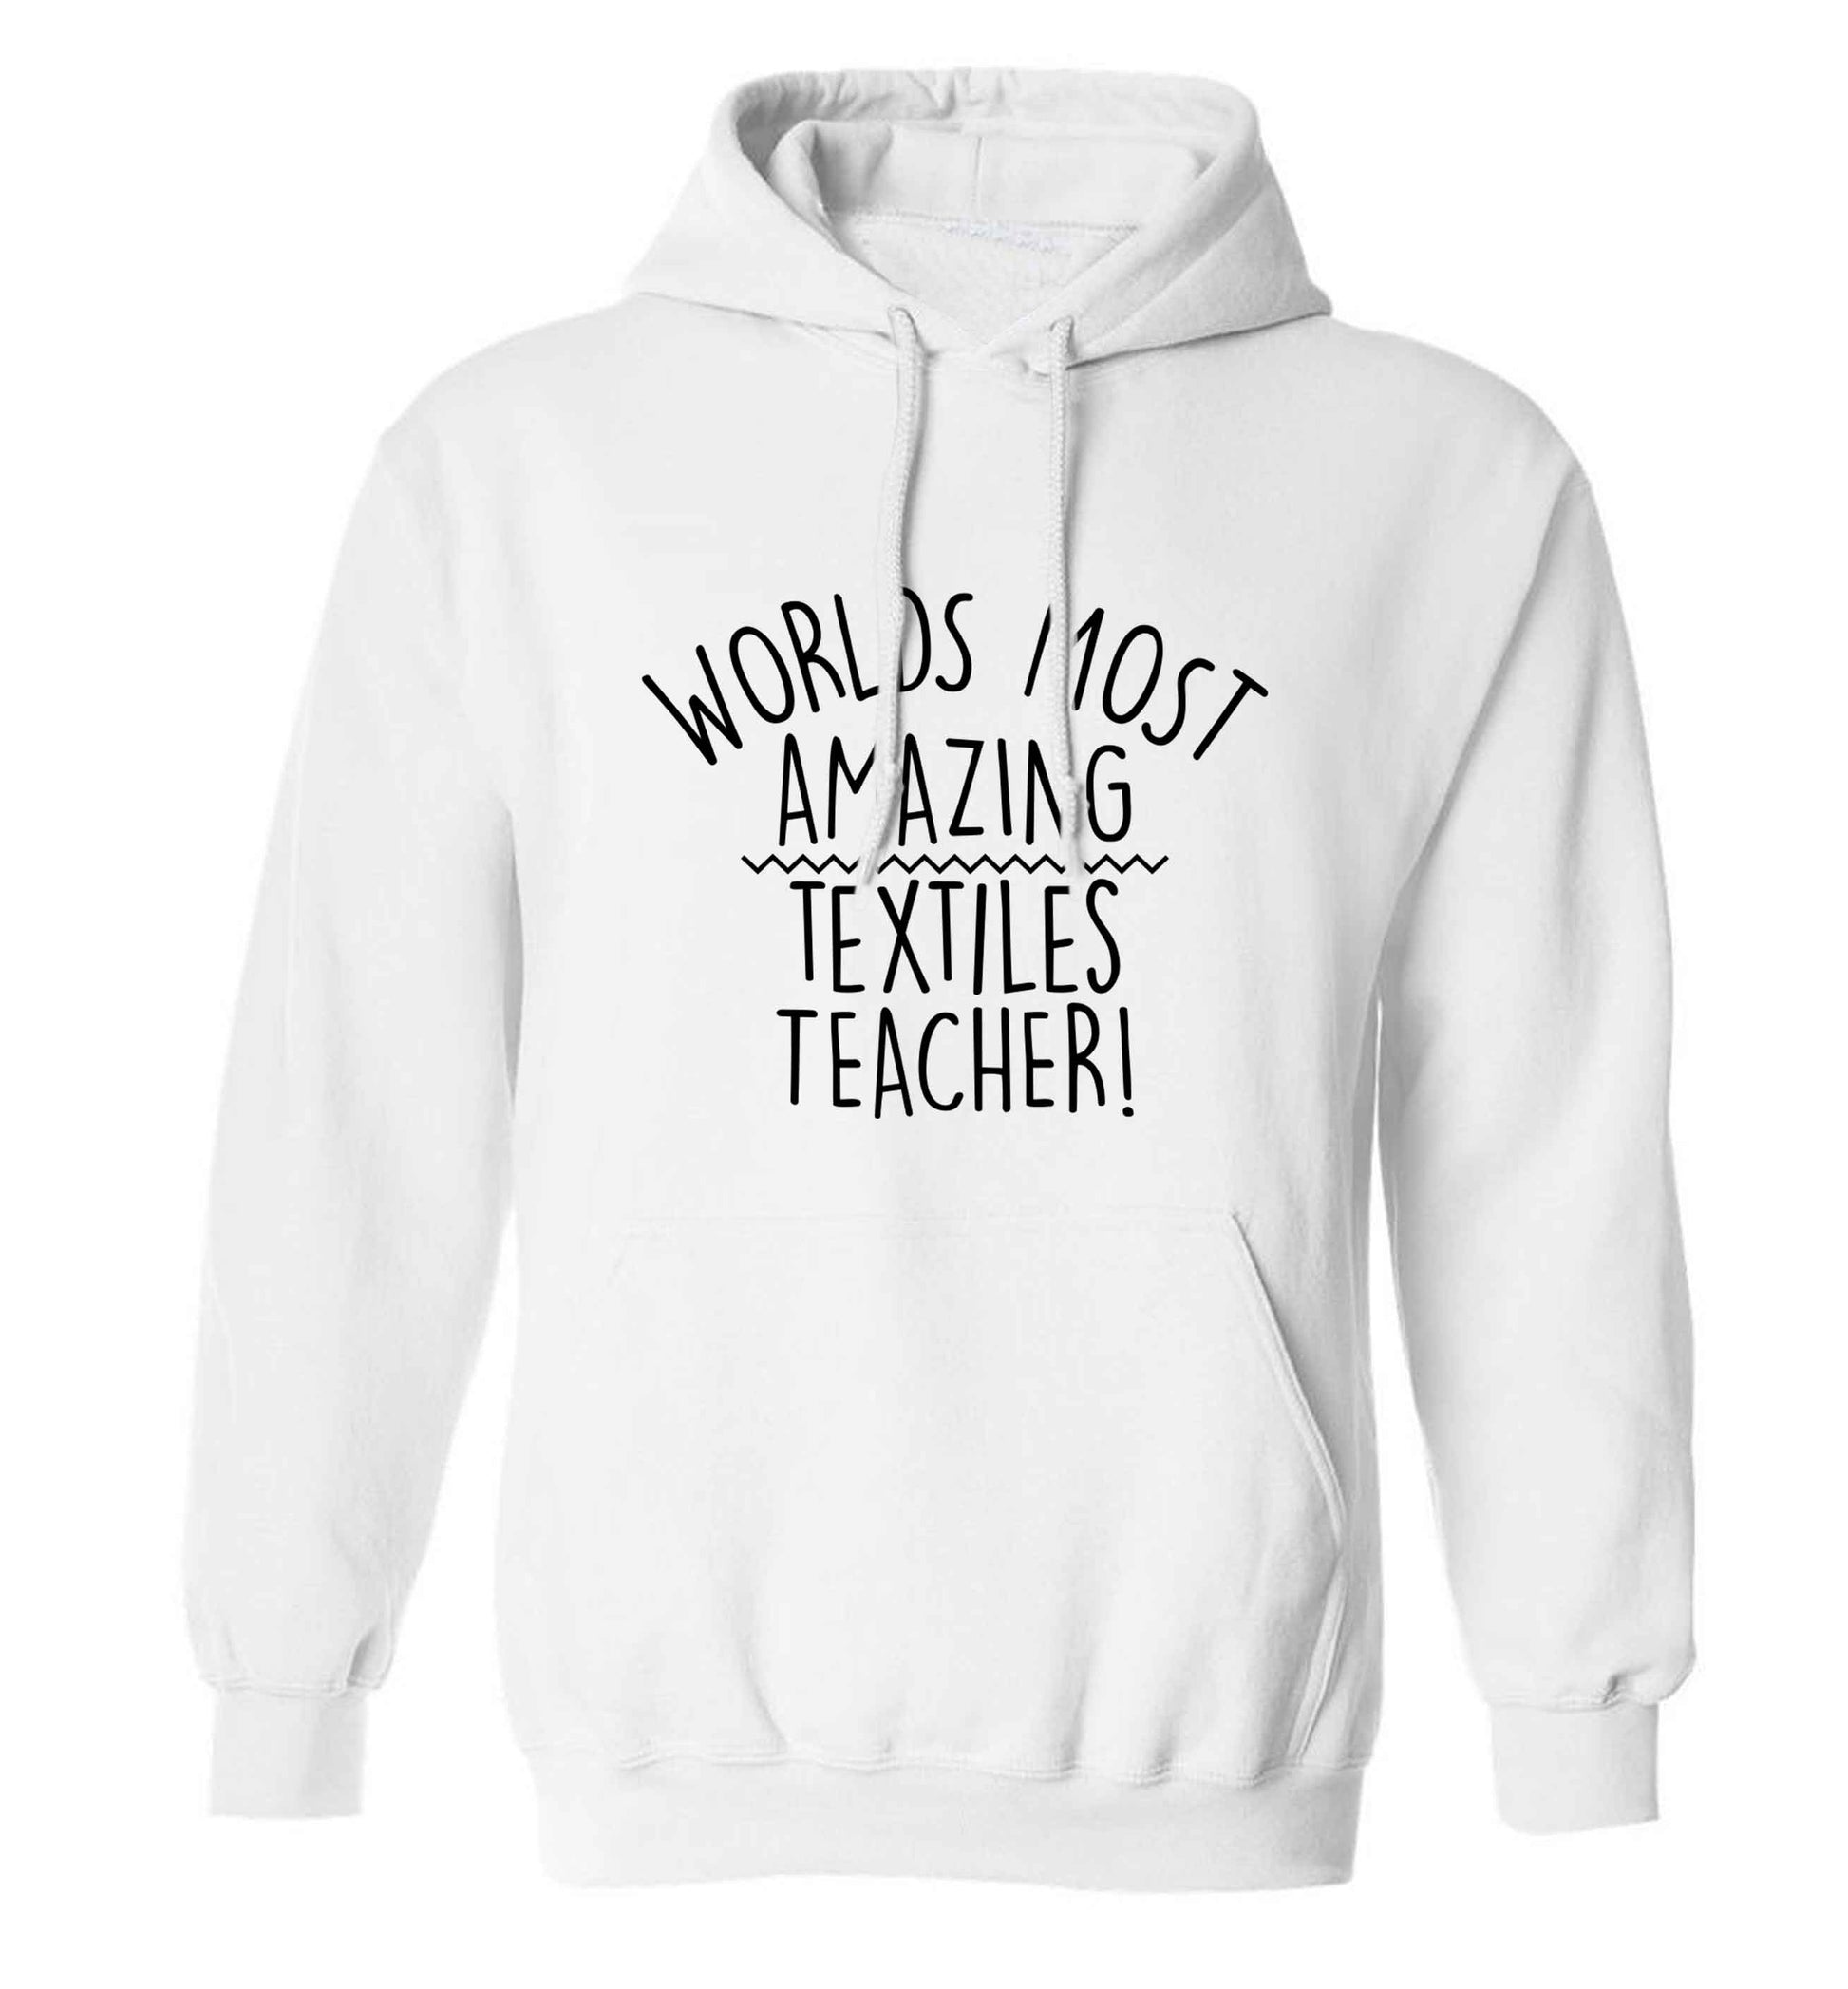 Worlds most amazing textiles teacher adults unisex white hoodie 2XL